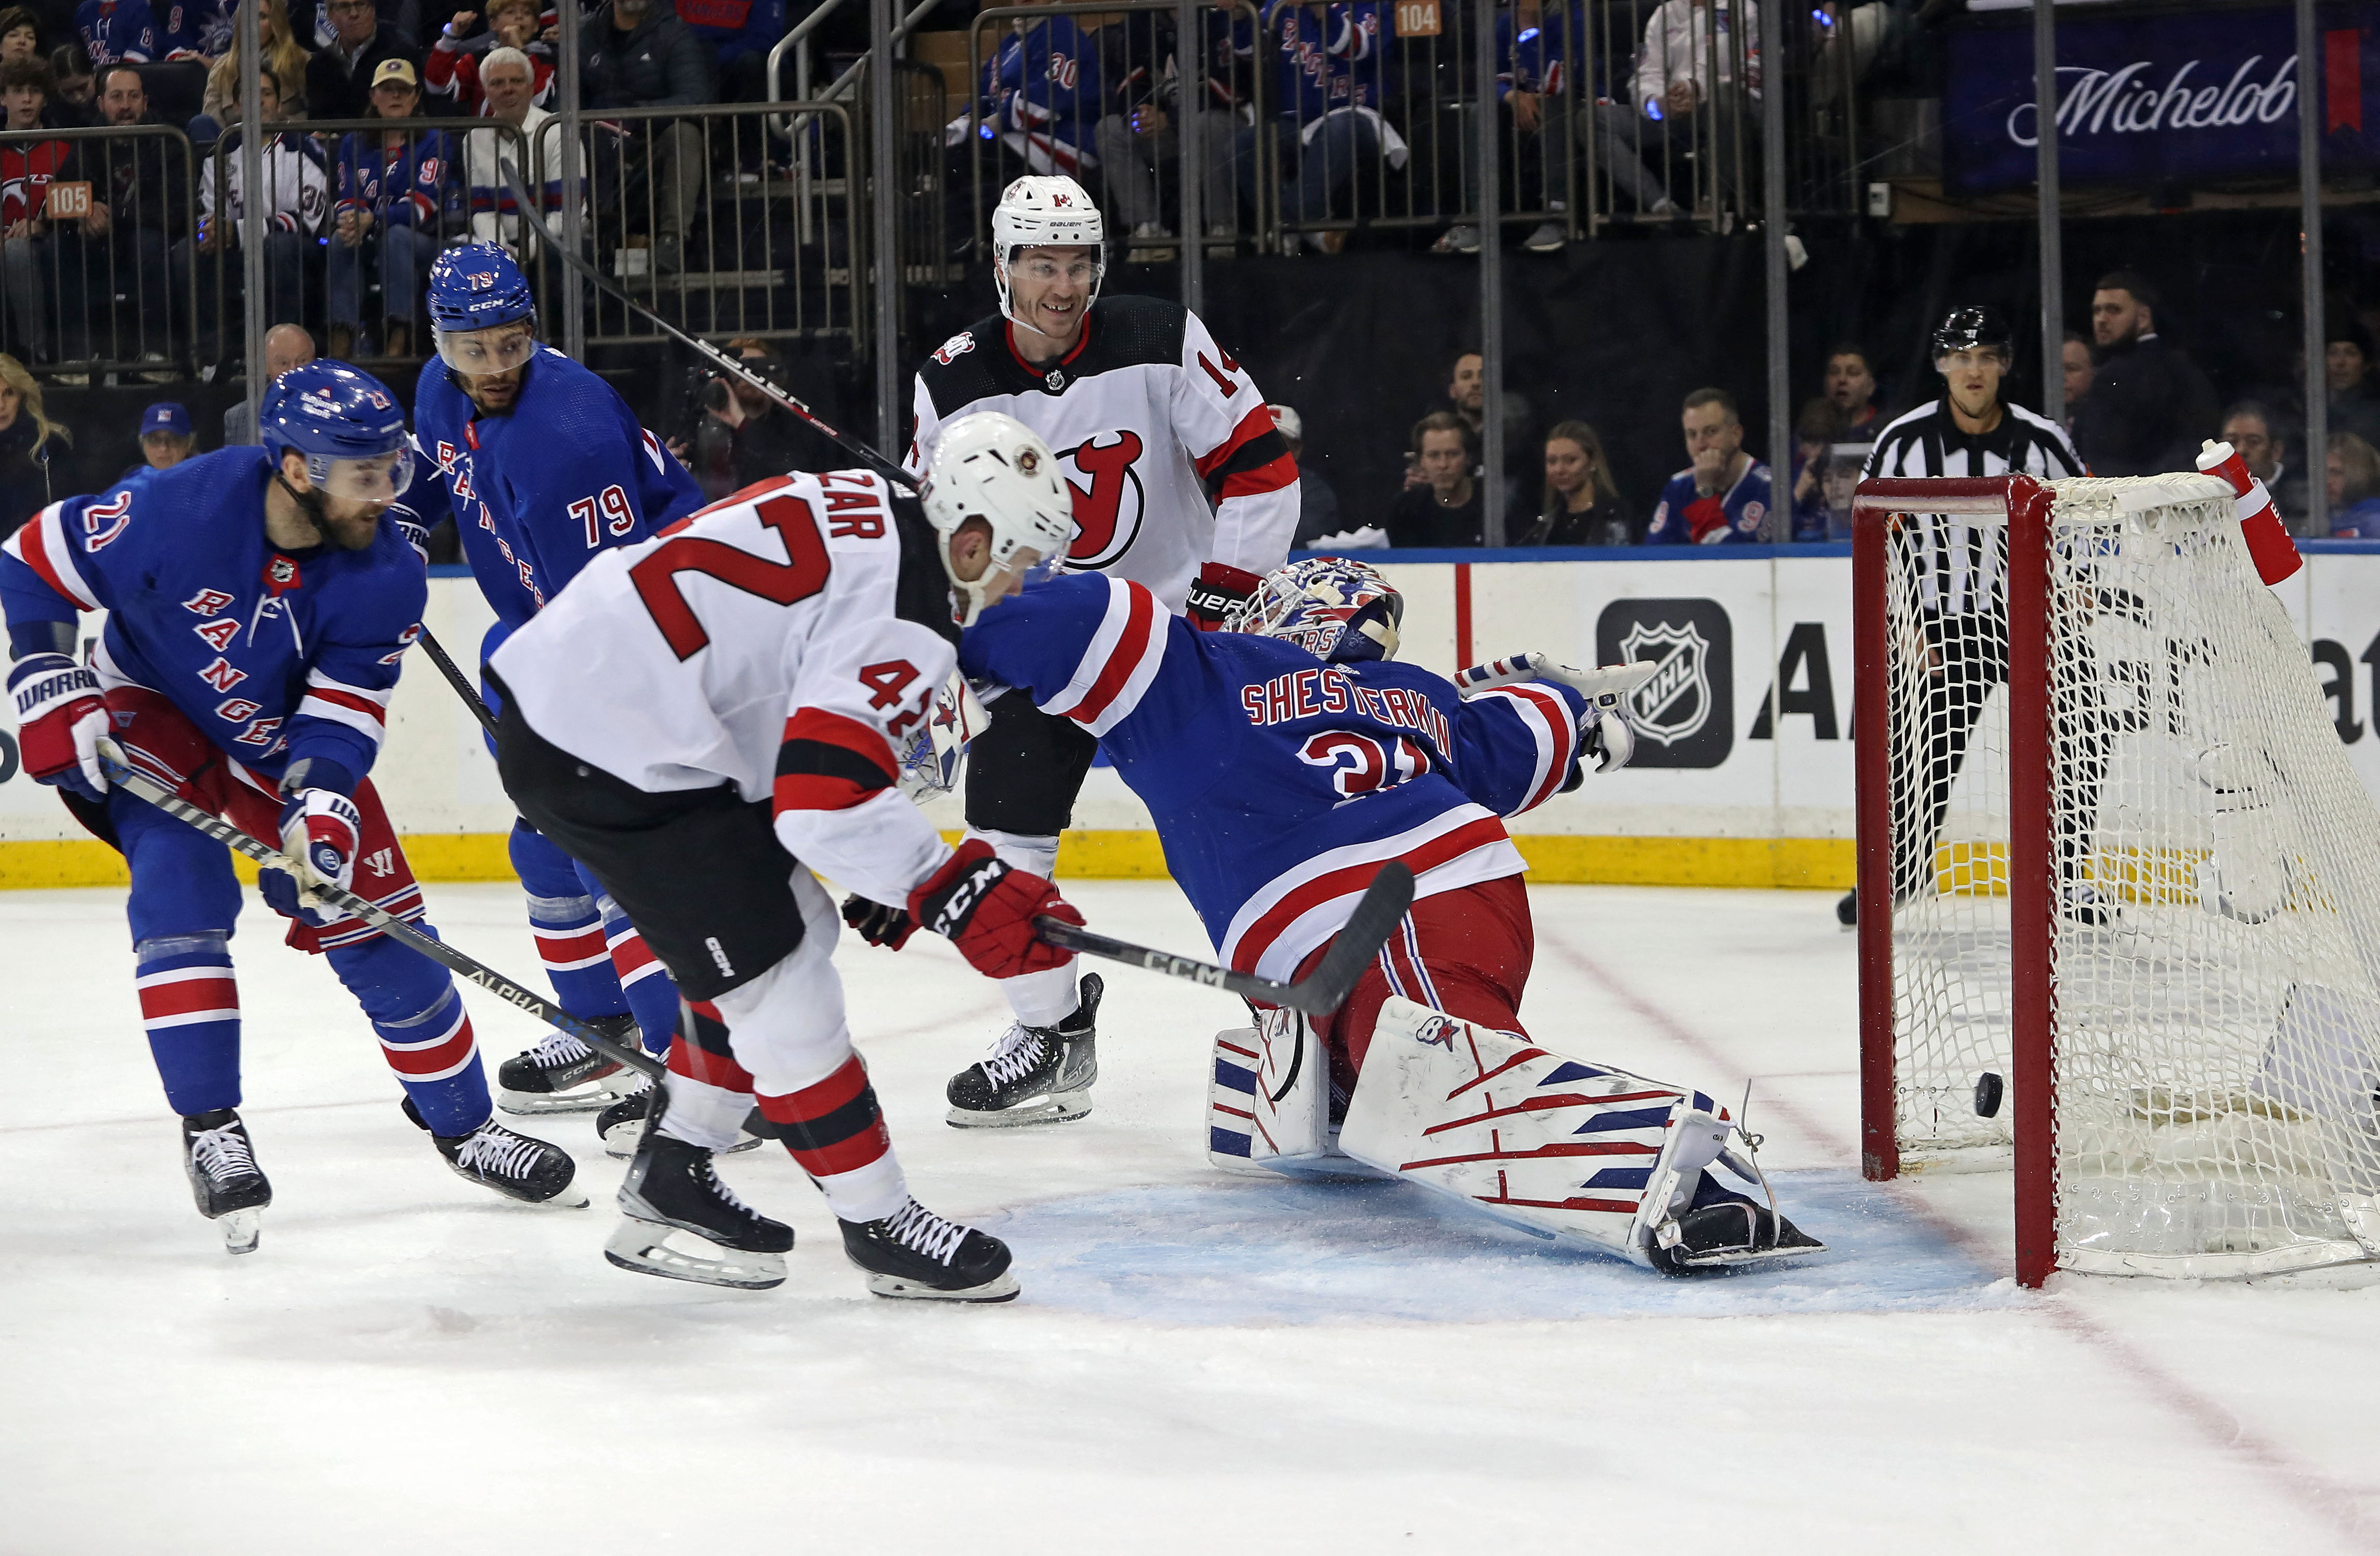 Kreider helps Rangers beat Devils 5-2 to force Game 7